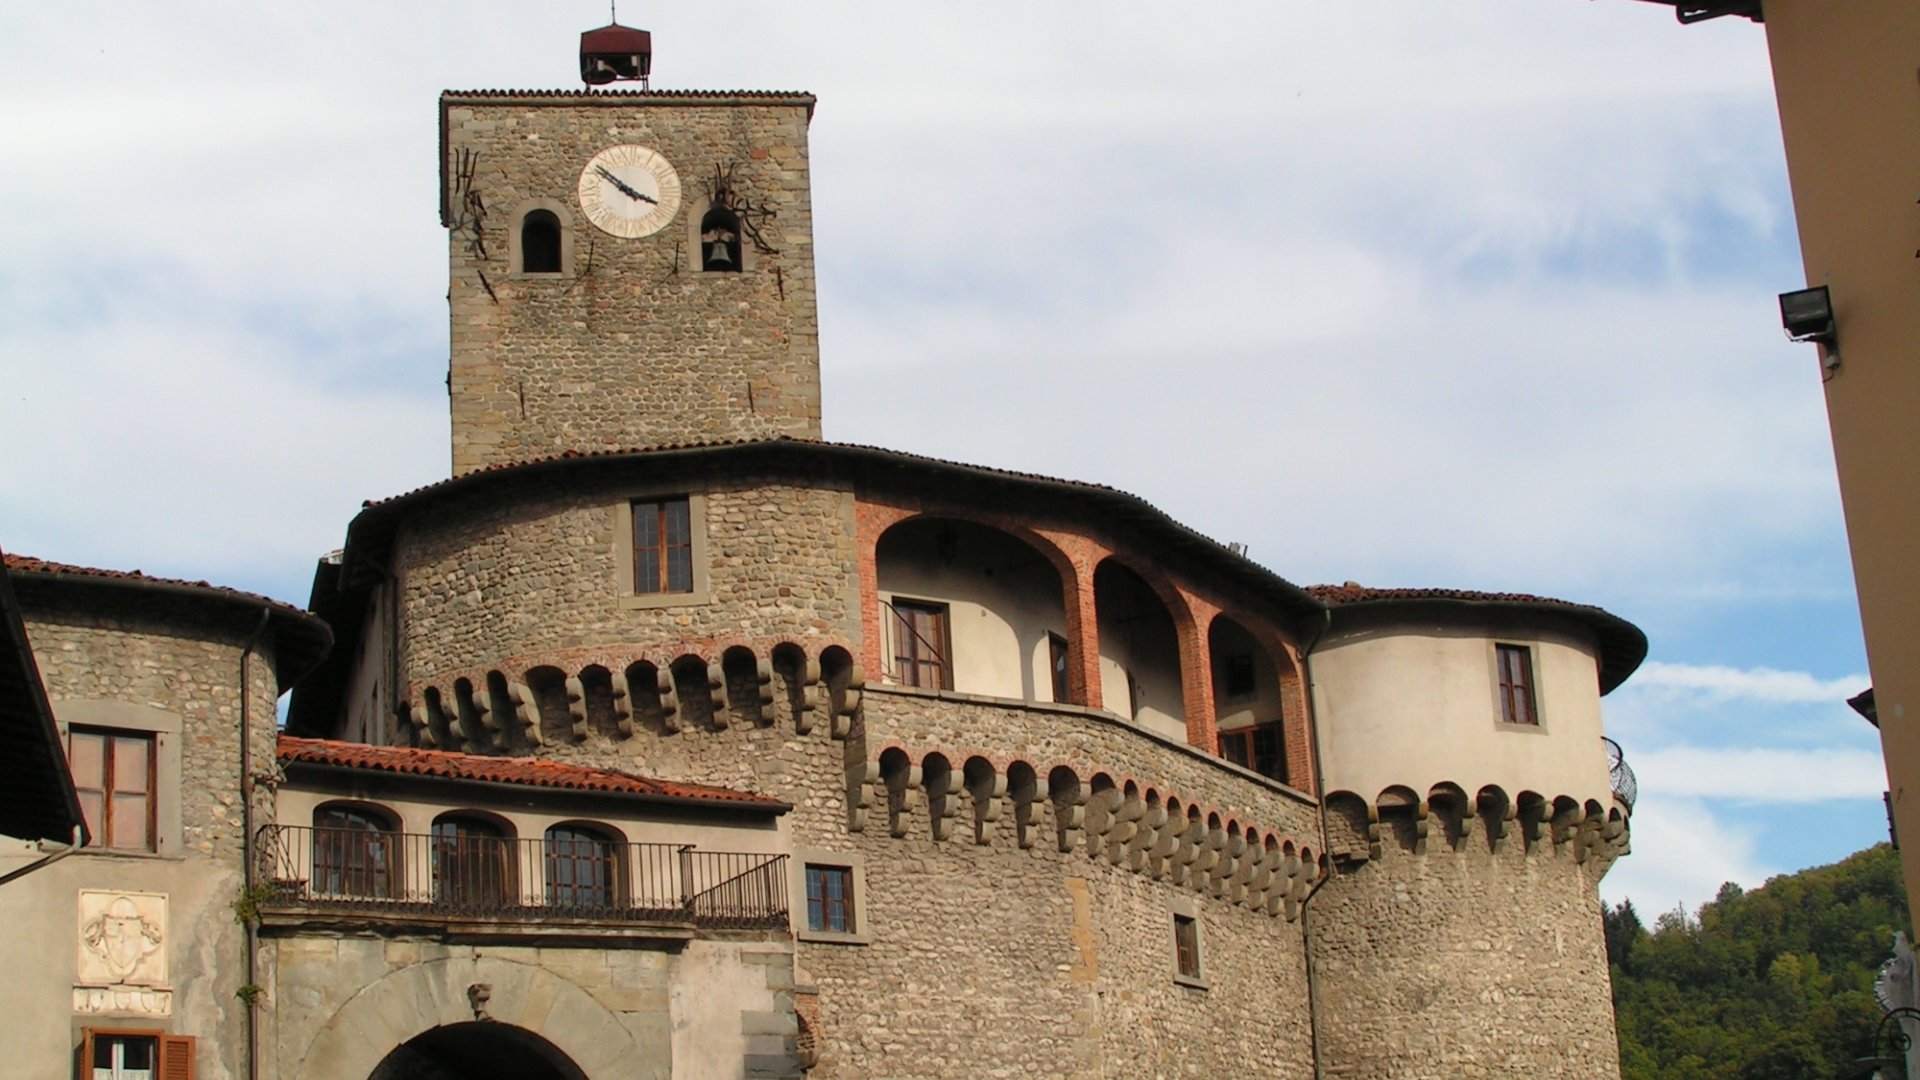 Guided tour of Castelnuovo di Garfagnana in Tuscany